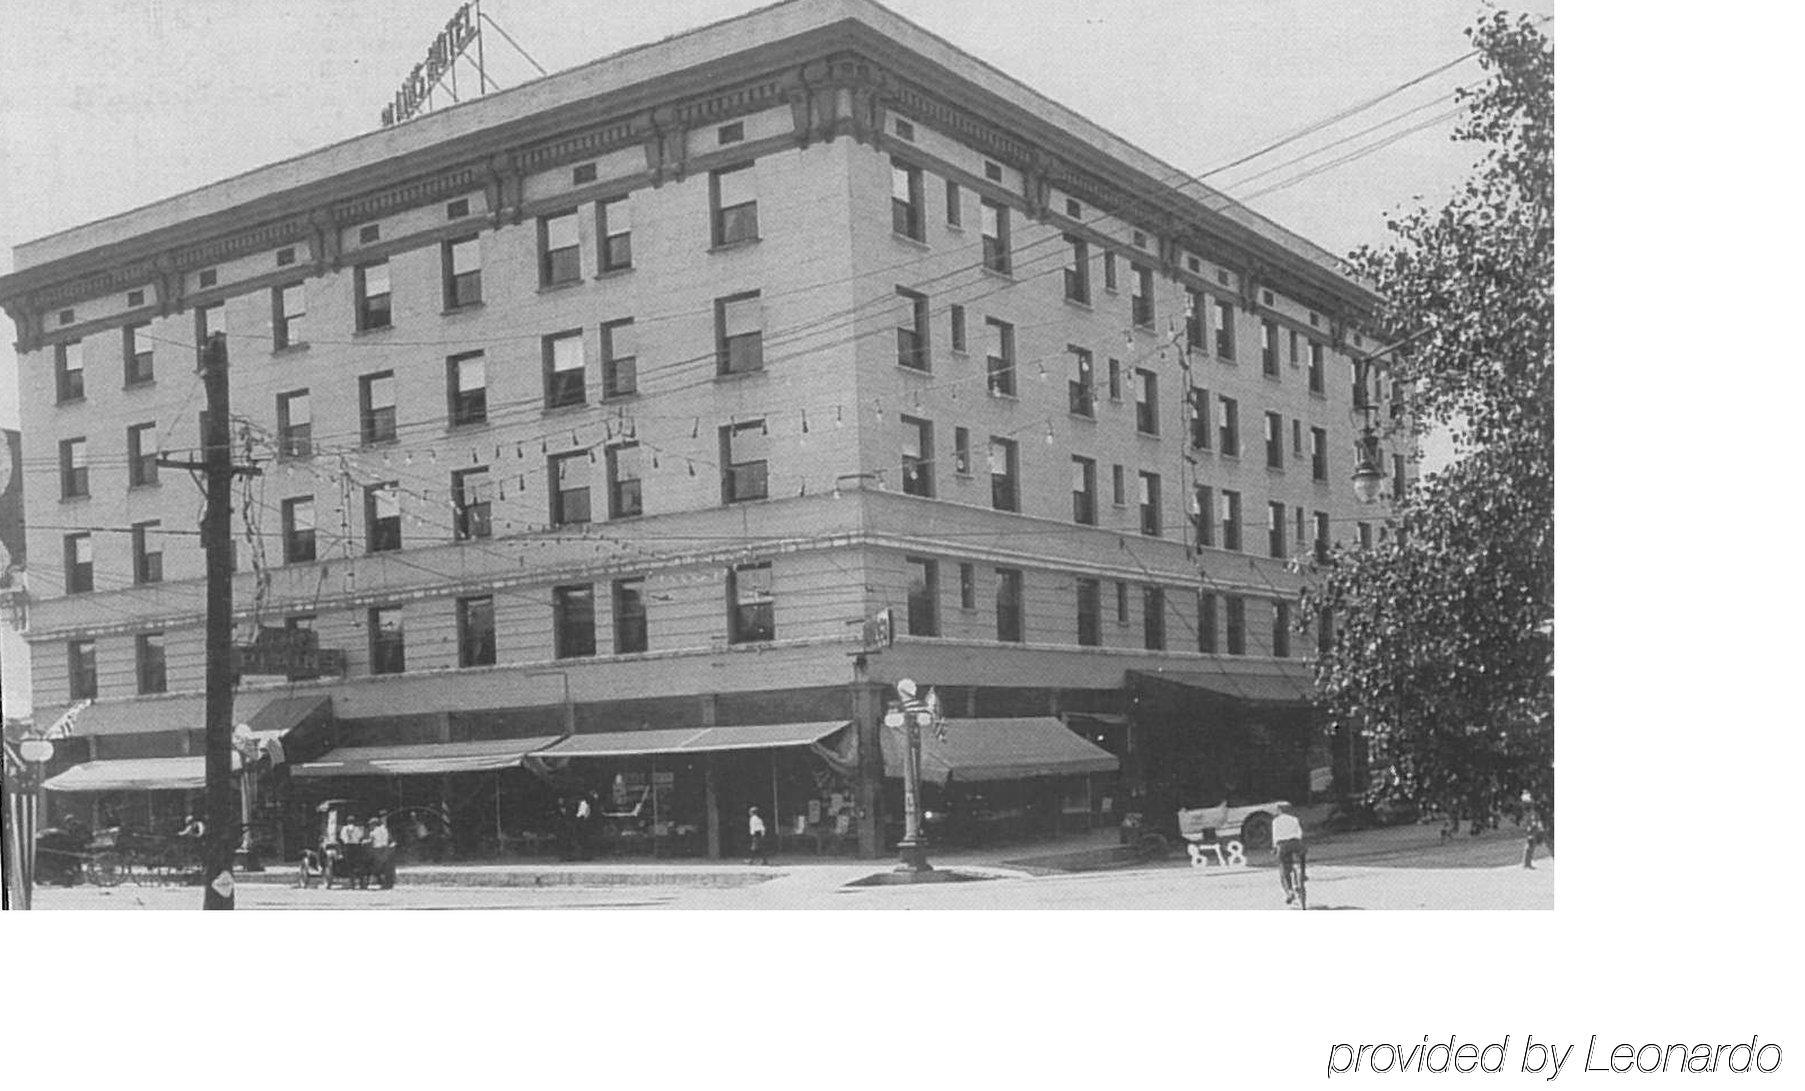 Historic Plains Hotel Cheyenne Exterior foto